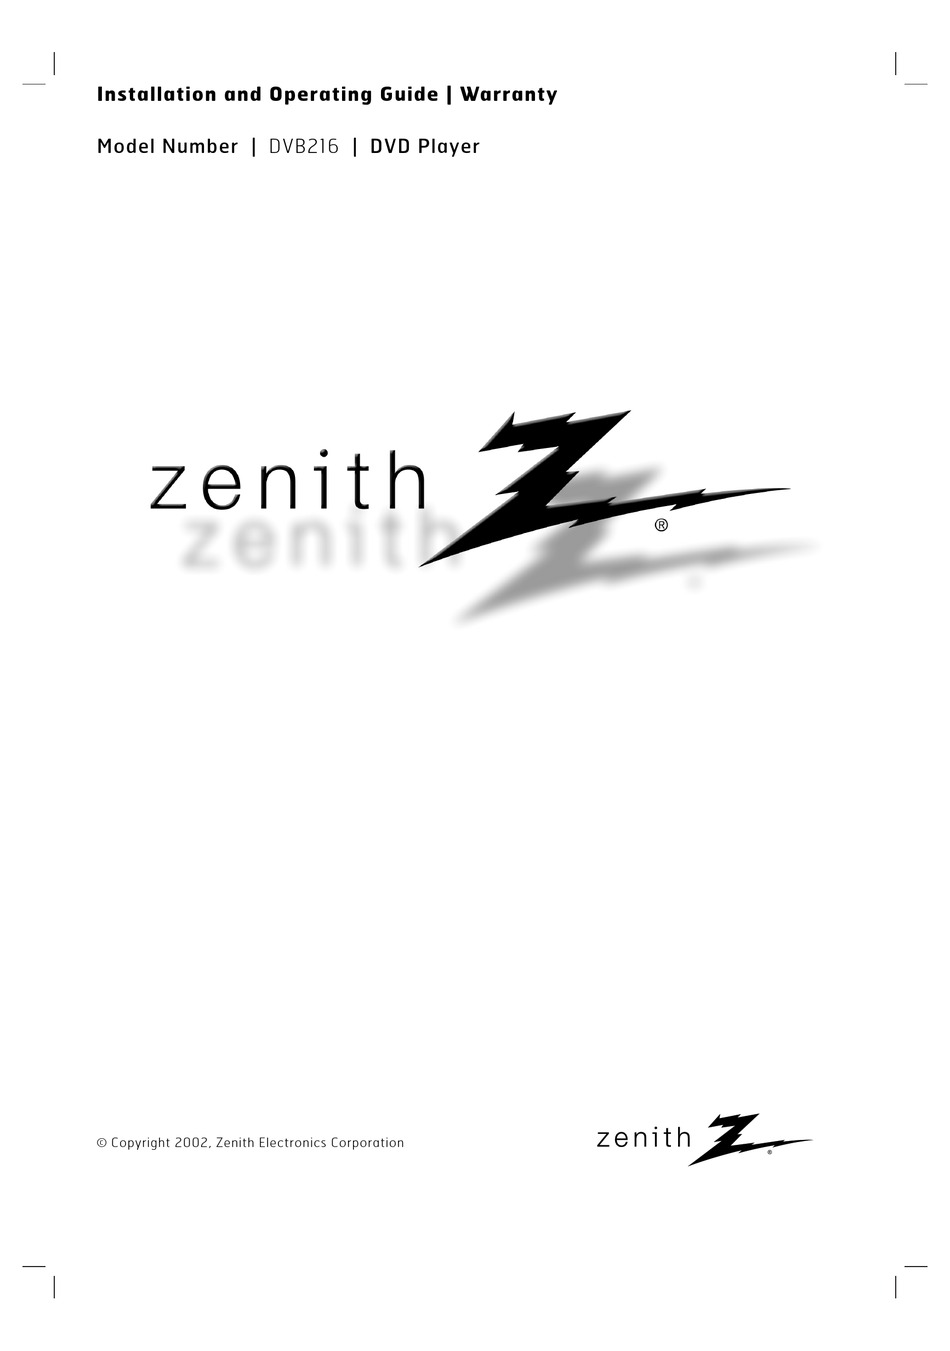 zenith disk error